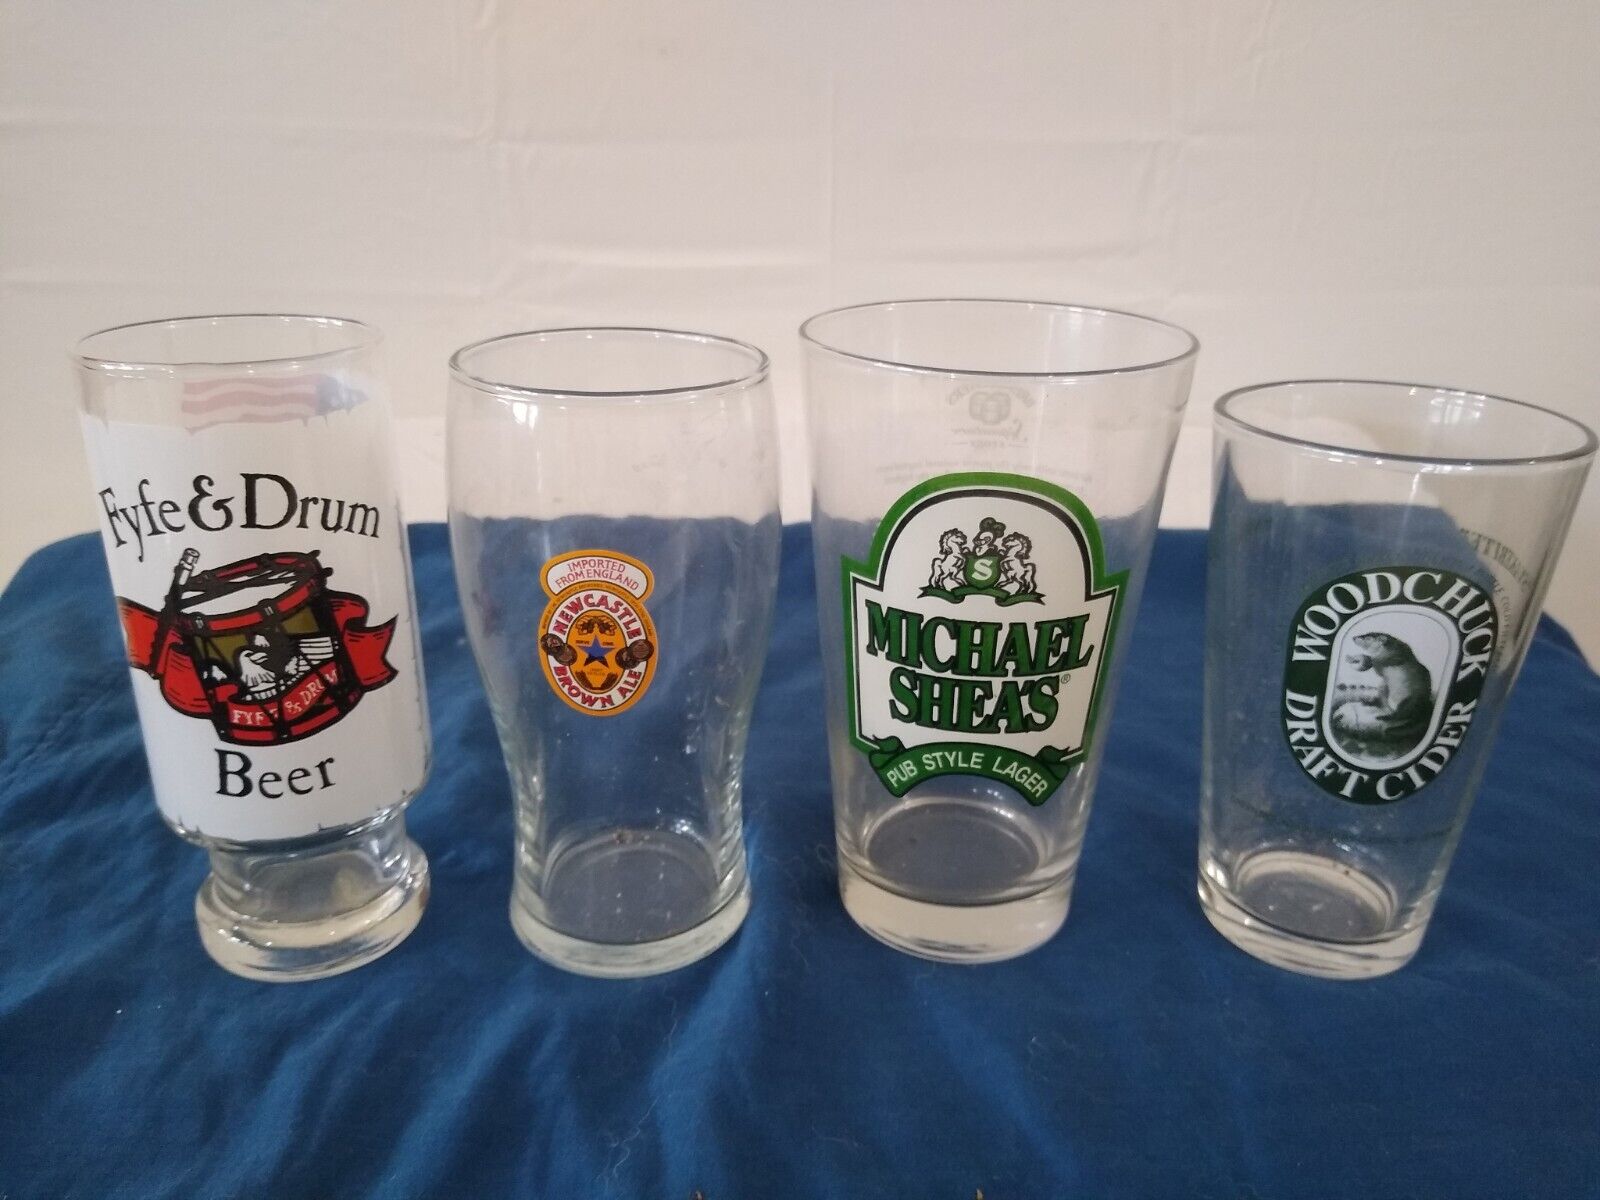 Beer Pint Glasses set of 4 Fyfe &Drum, Woodchuck Cider, Newcastle, Michael Sheas